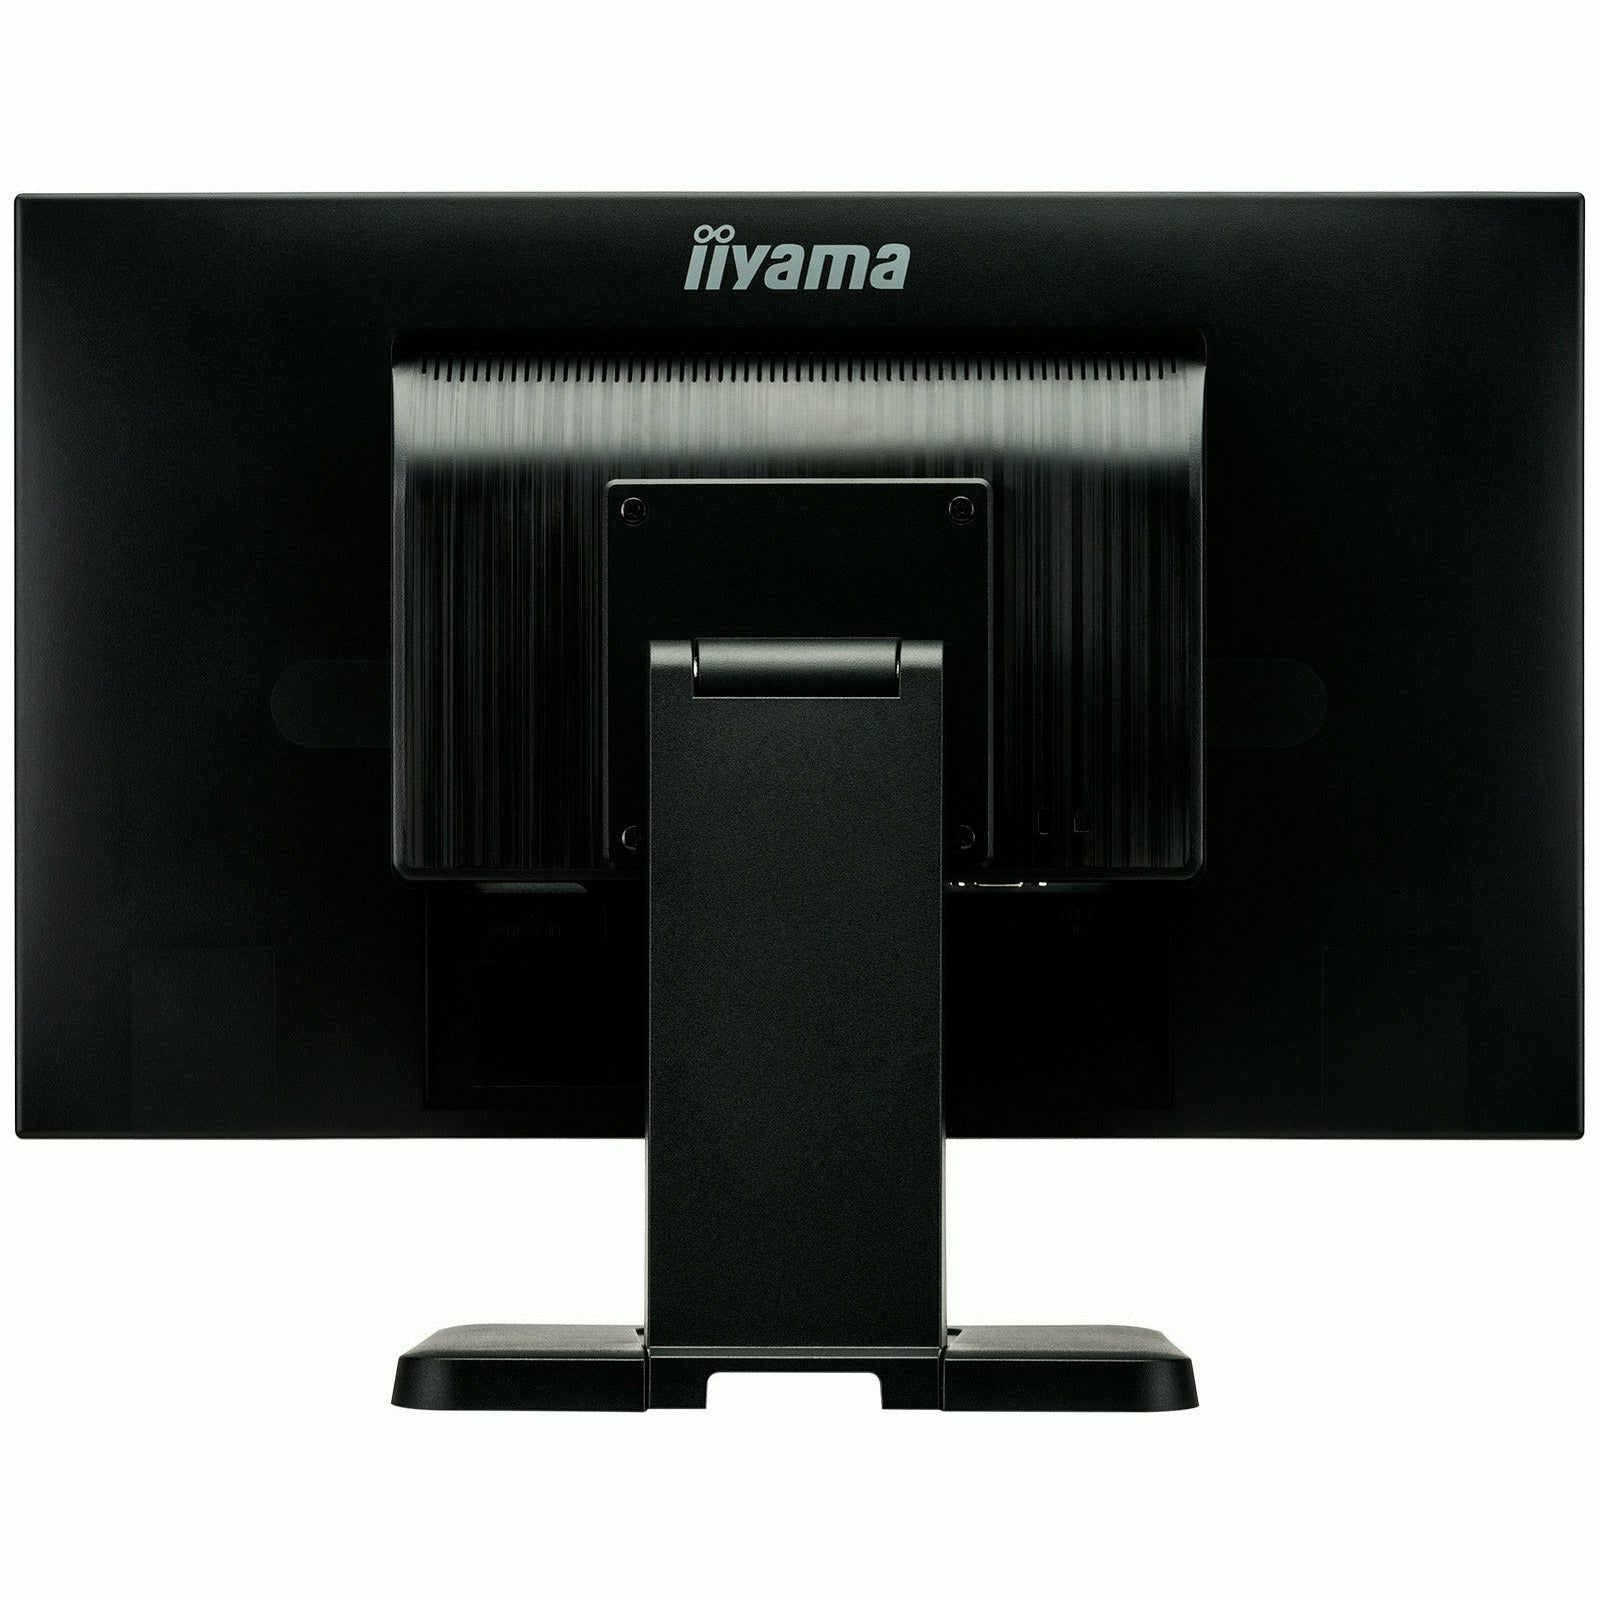 iiyama ProLite T2252MSC-B1 22” P-CAP 10pt IPS Touch Screen Display